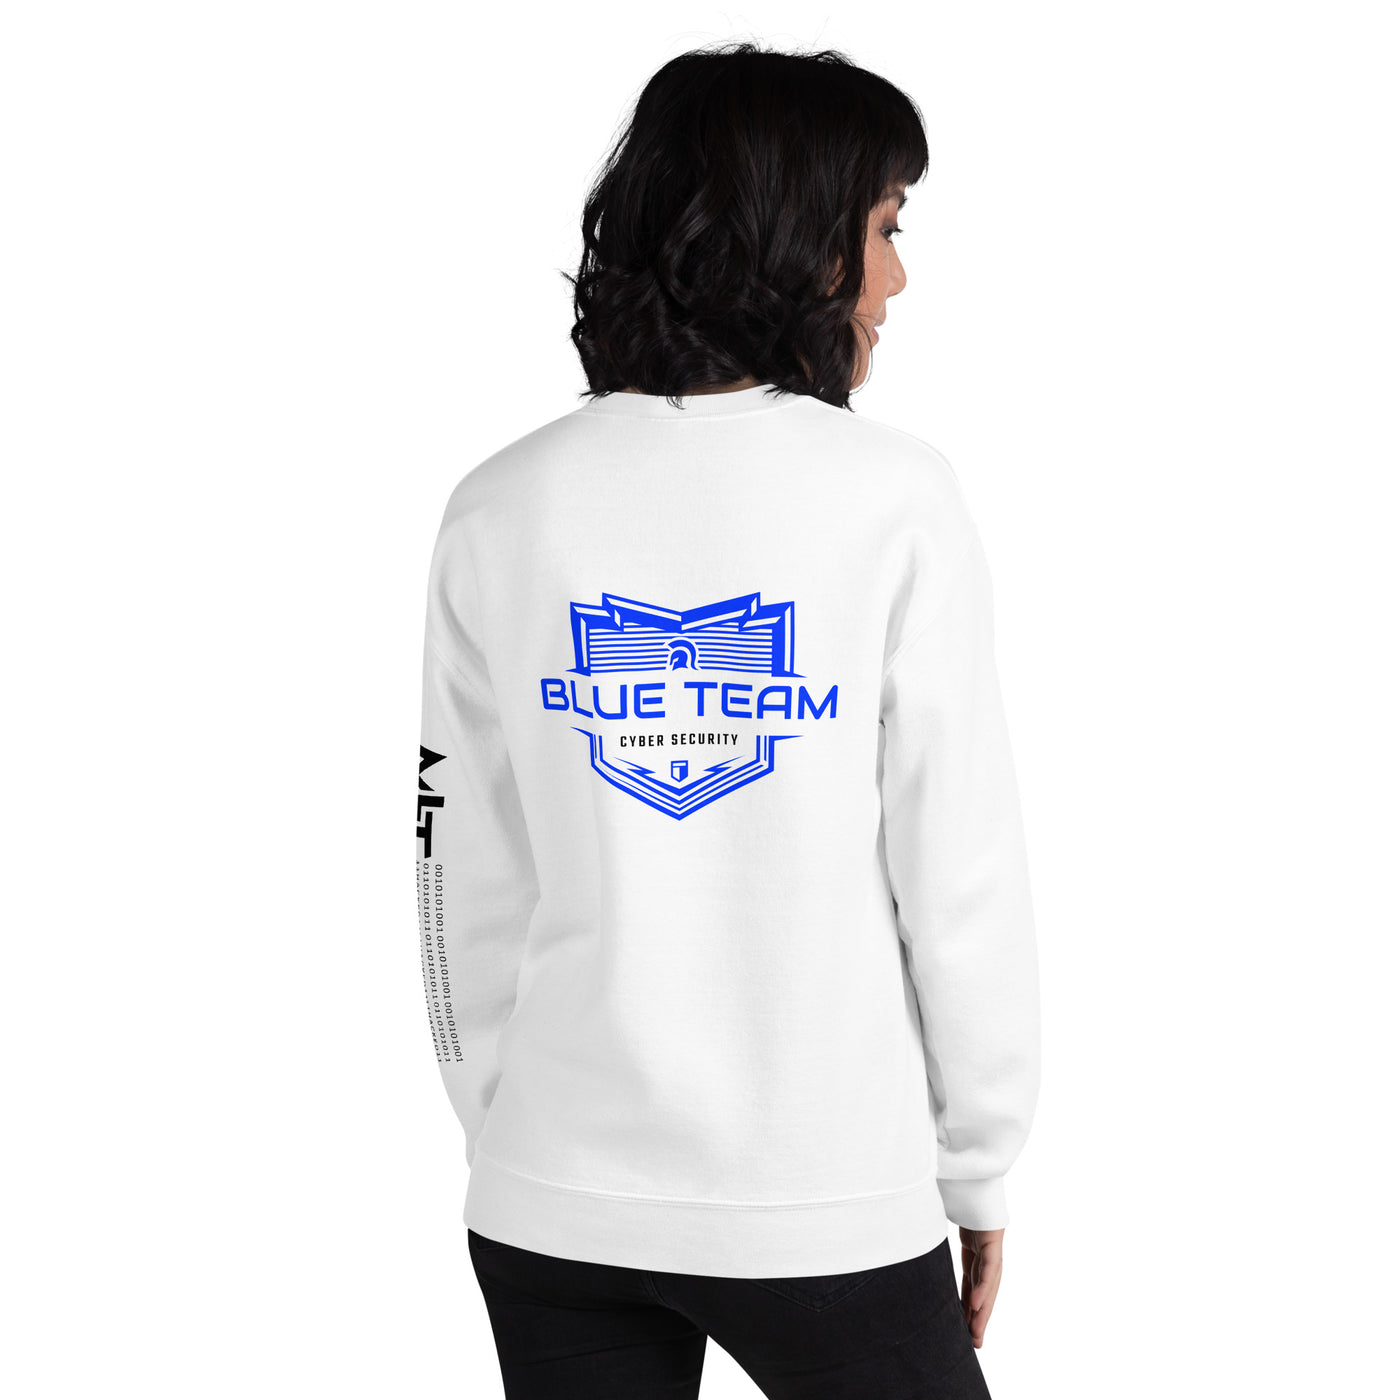 Cyber Security Blue Team V17 - Unisex Sweatshirt ( Back Print )